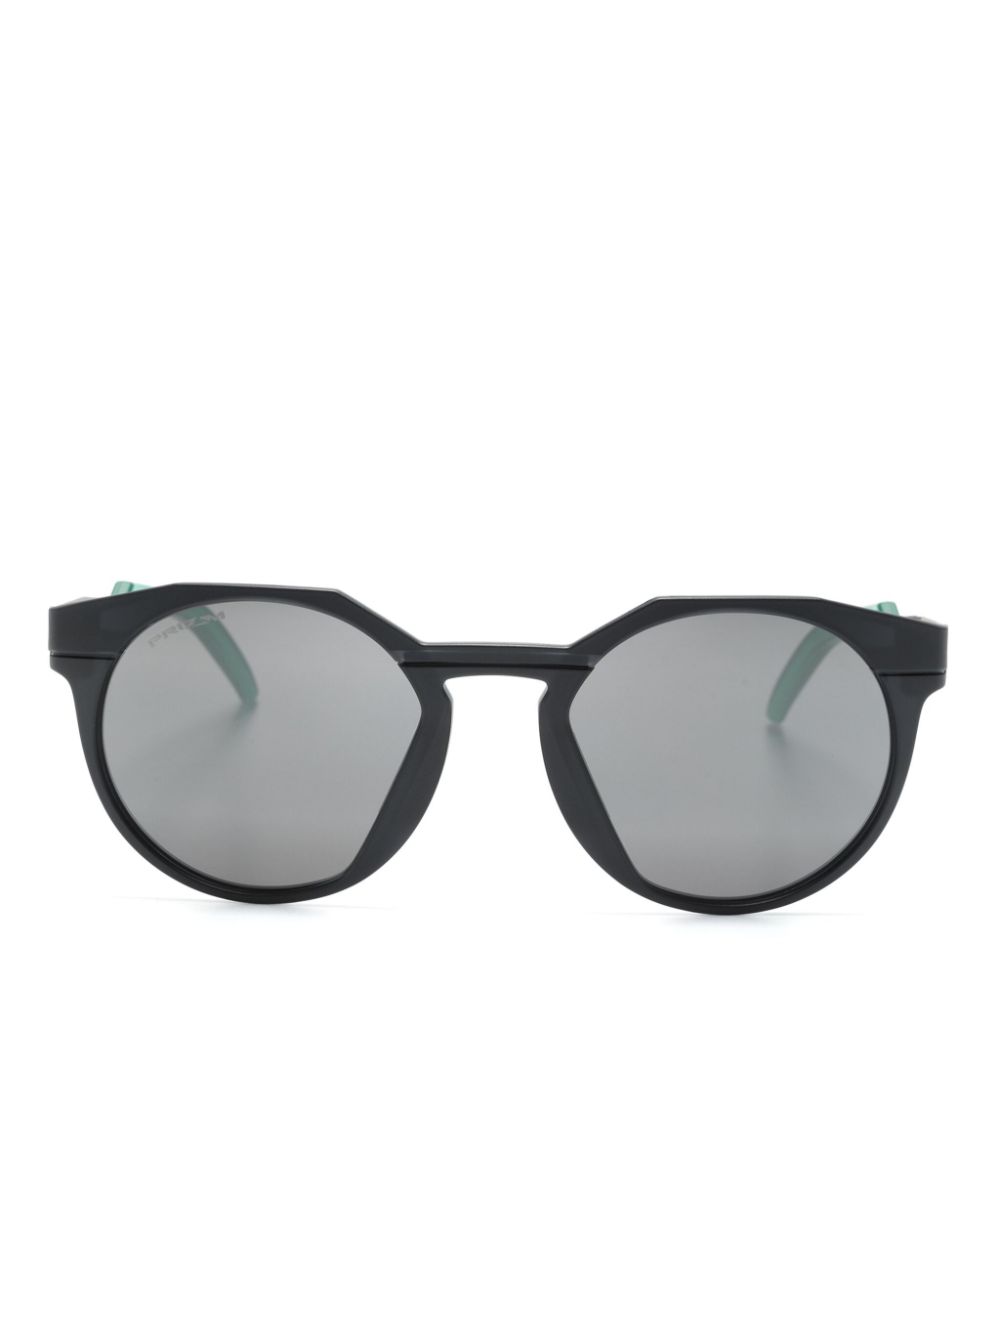 HSTN round-frame sunglasses<BR/><BR/><BR/>